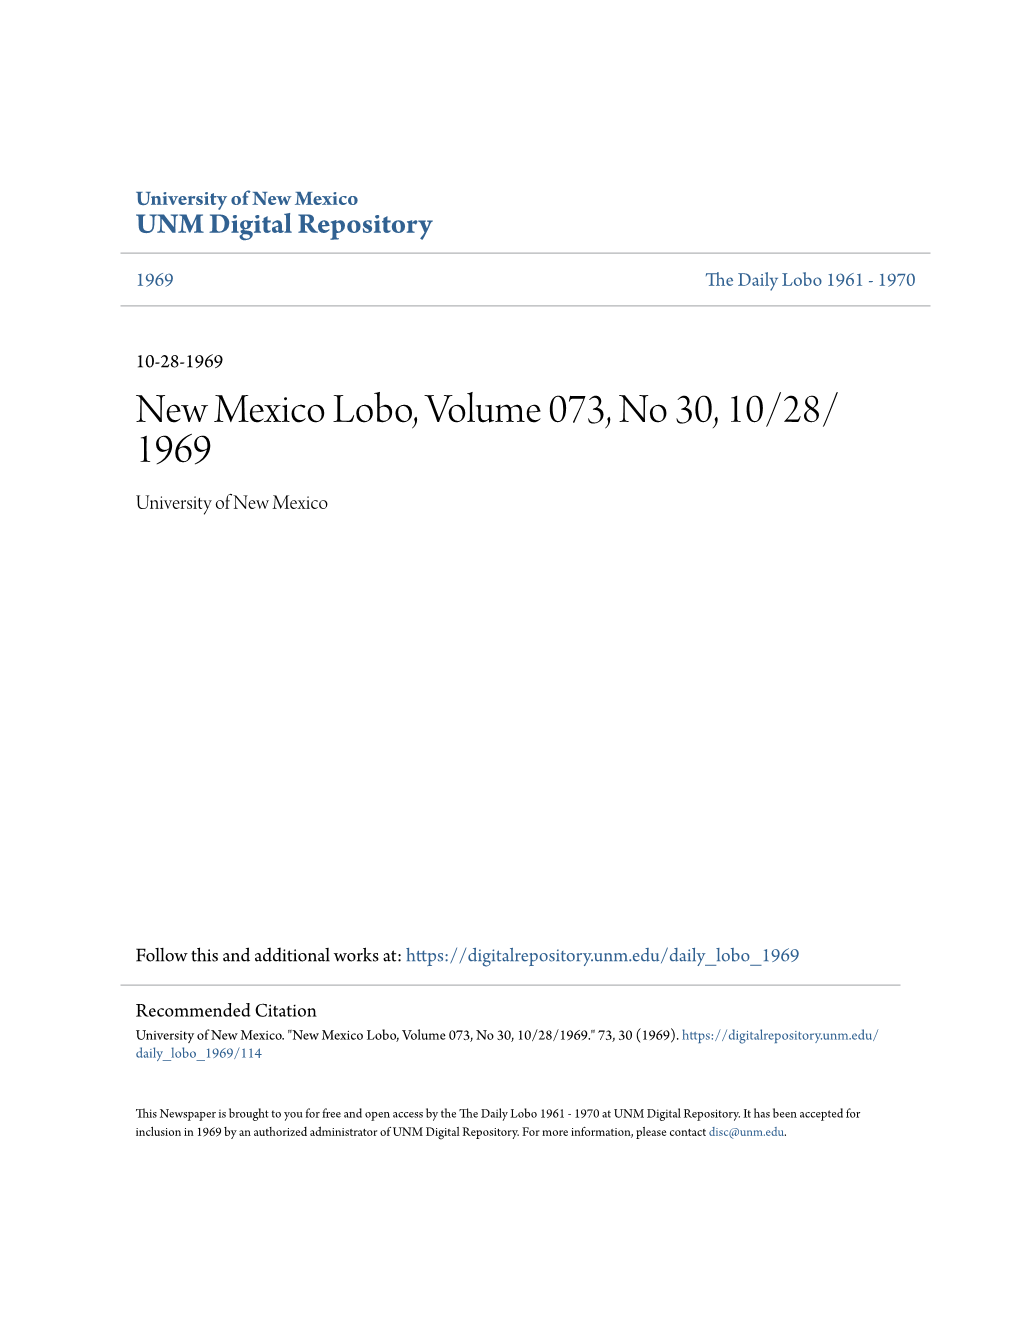 New Mexico Lobo, Volume 073, No 30, 10/28/1969." 73, 30 (1969)